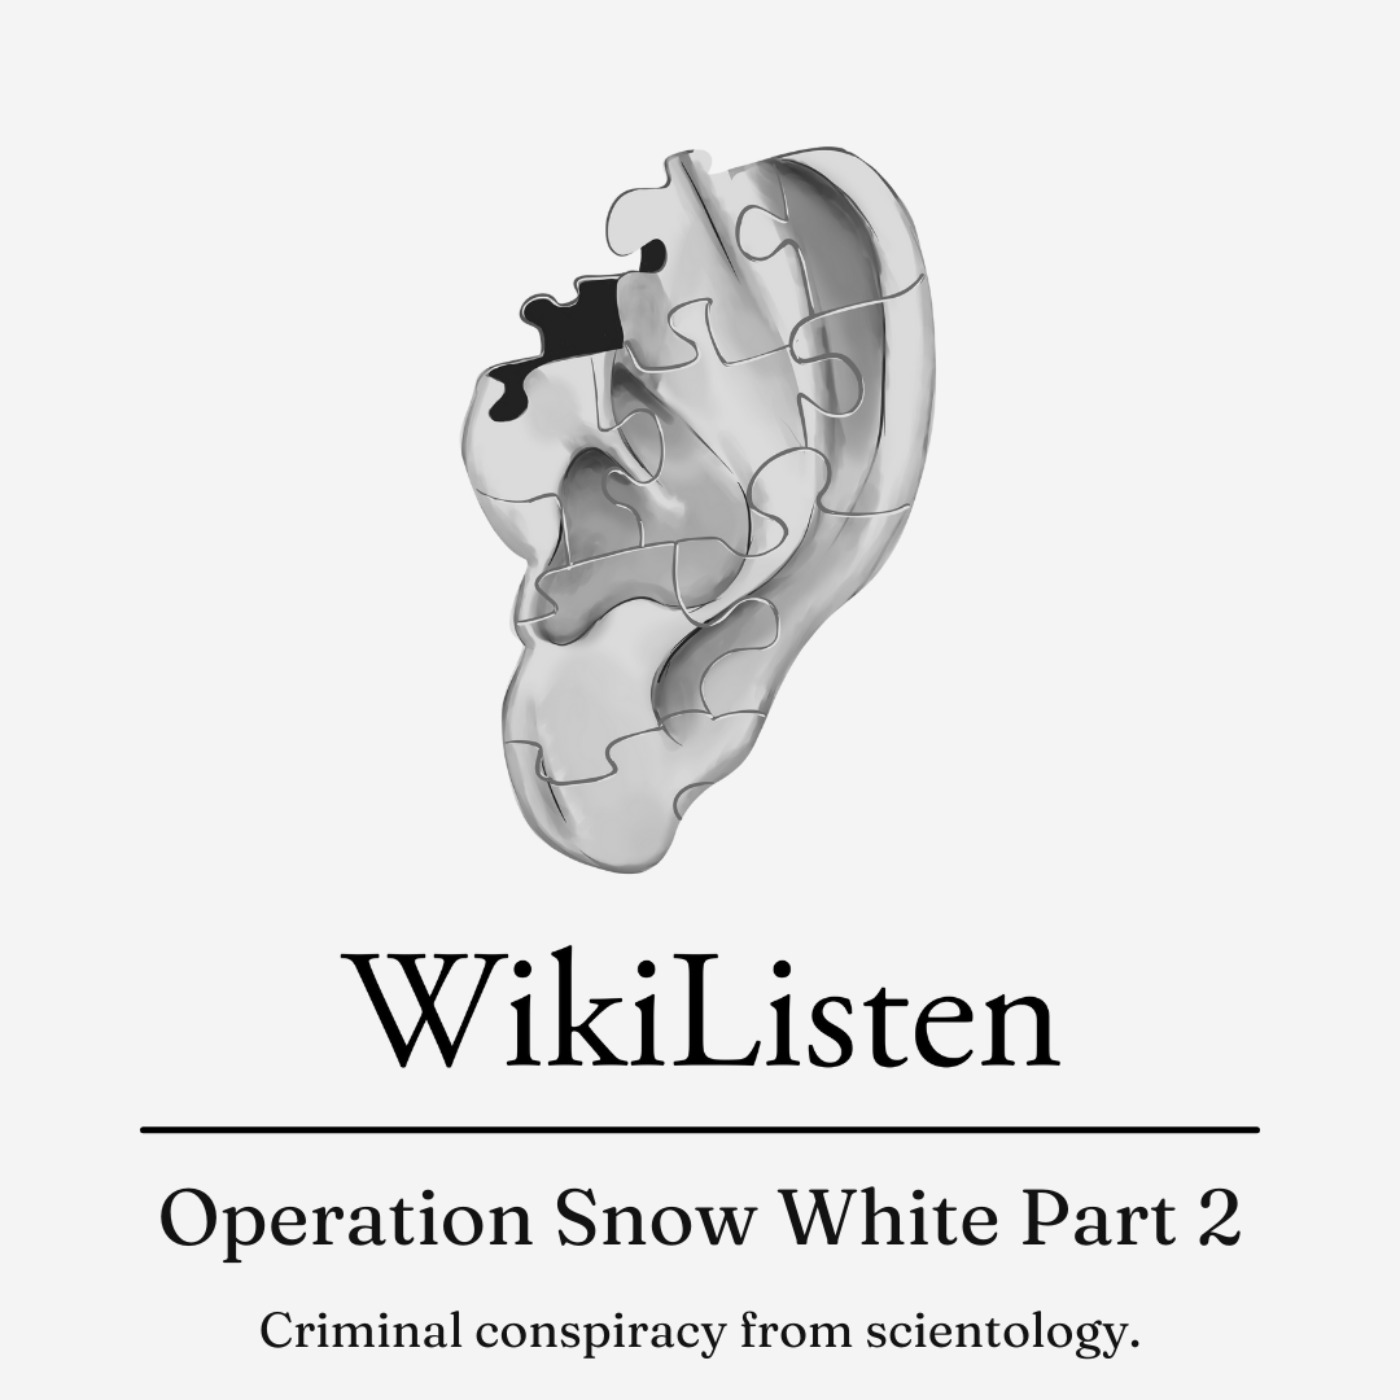 Operation Snow White Part 2